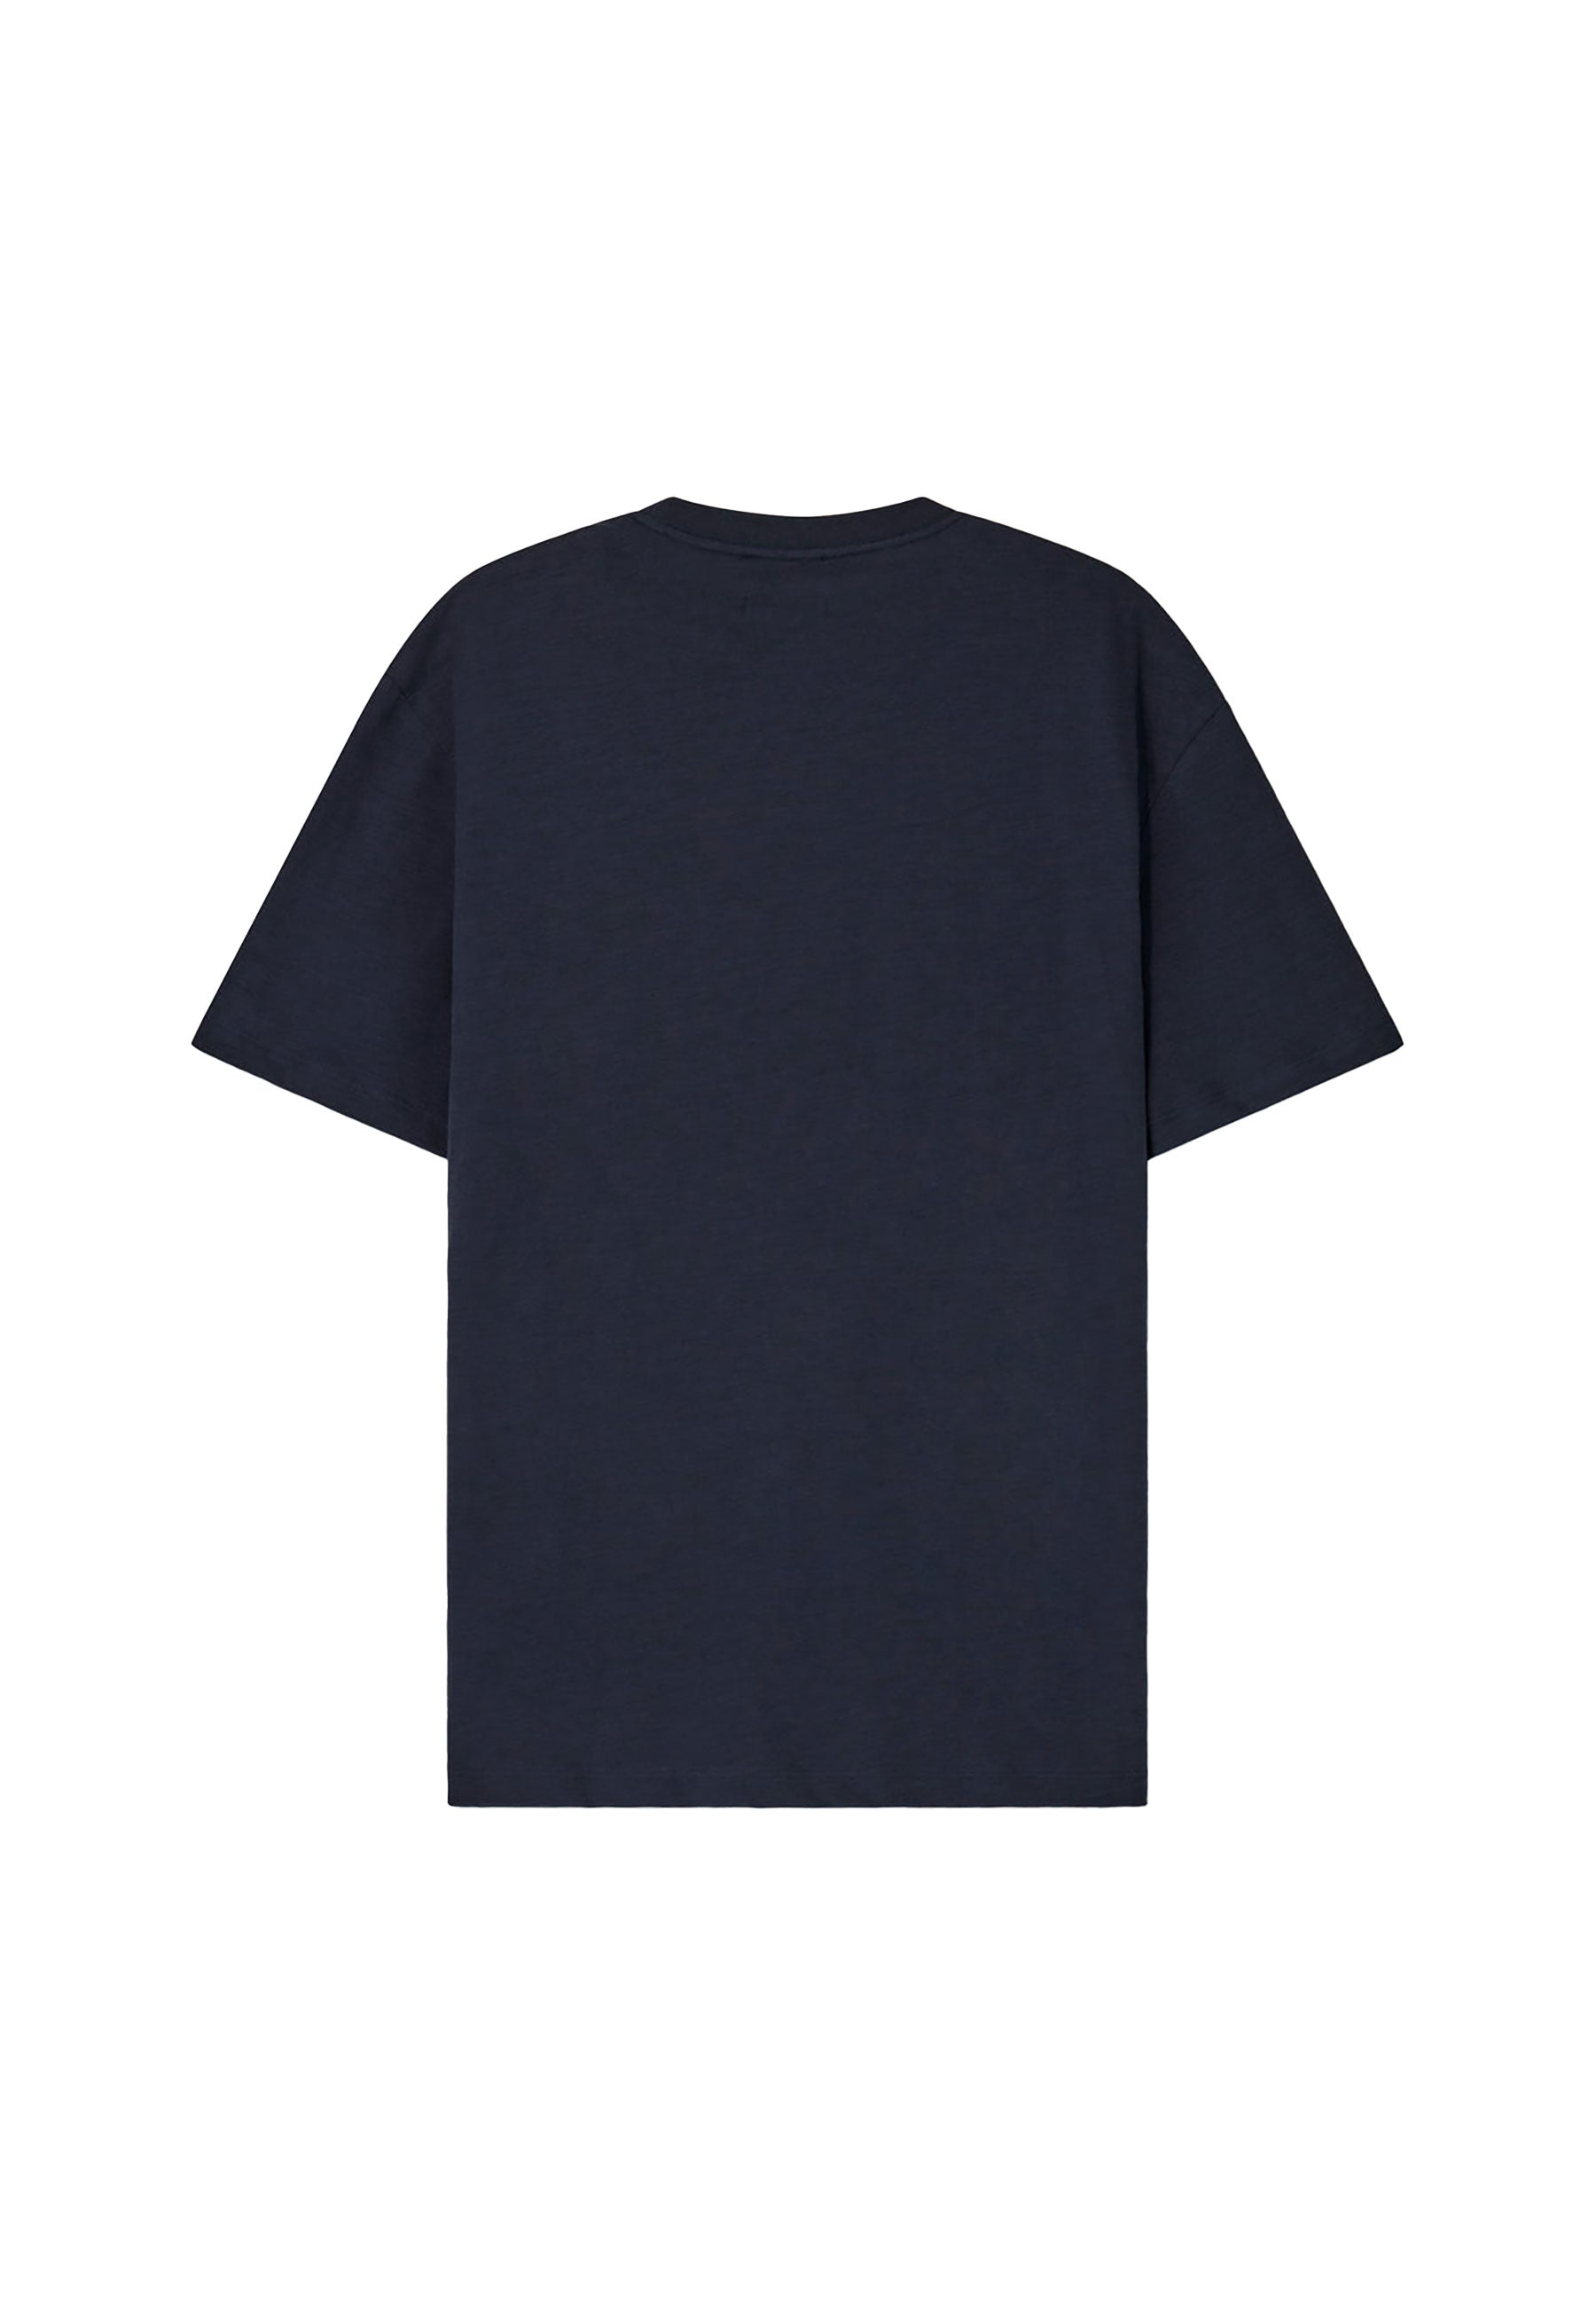 Arnoux Pk T-Shirt in Navy Blue T-Shirts GAS   